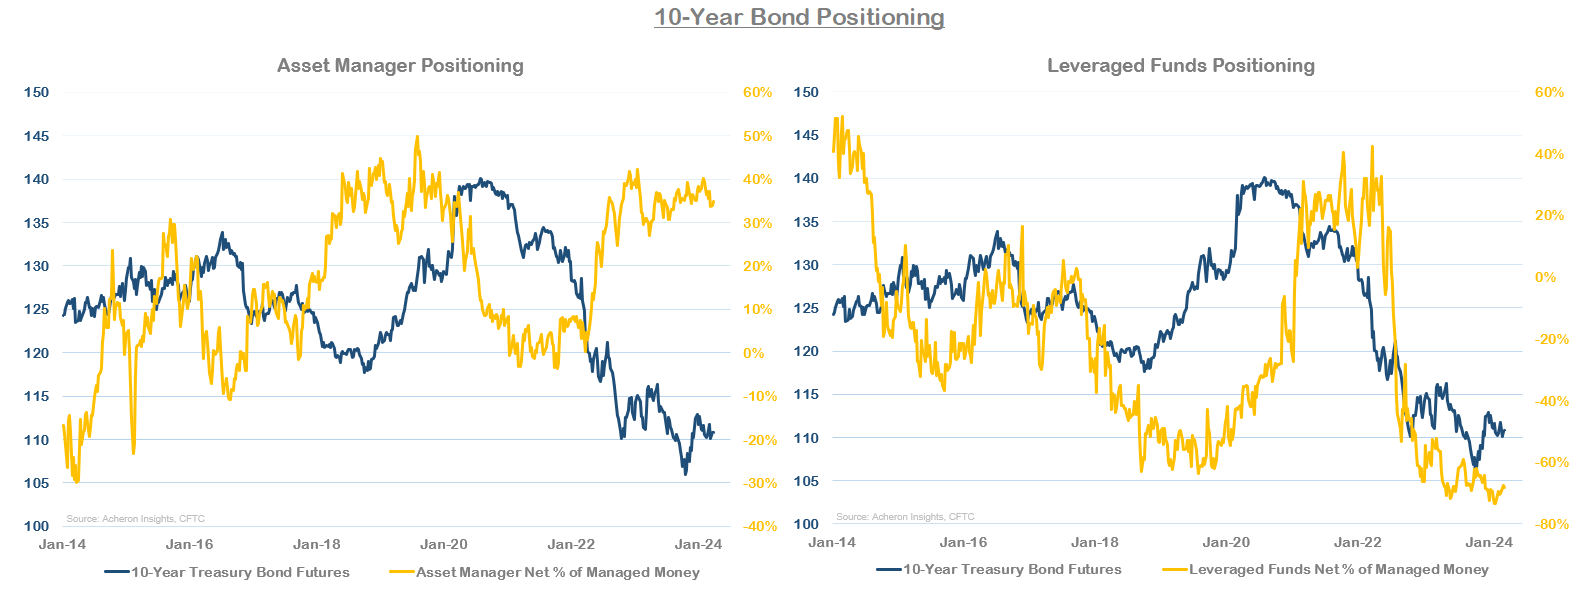 10-Year Bond Positioning